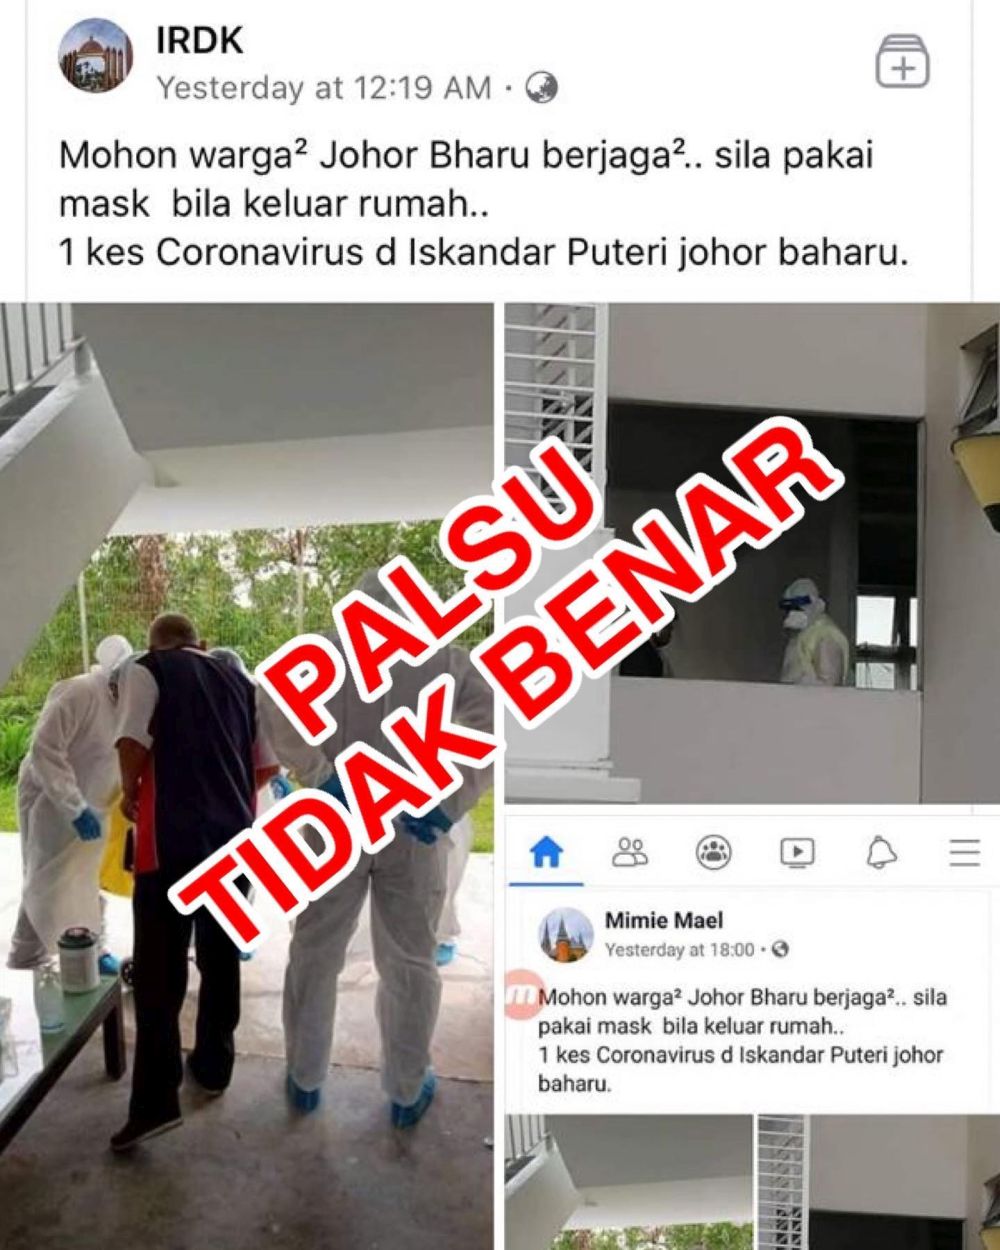 Johor Health Department says no Covid-19 case in Iskandar Puteri
